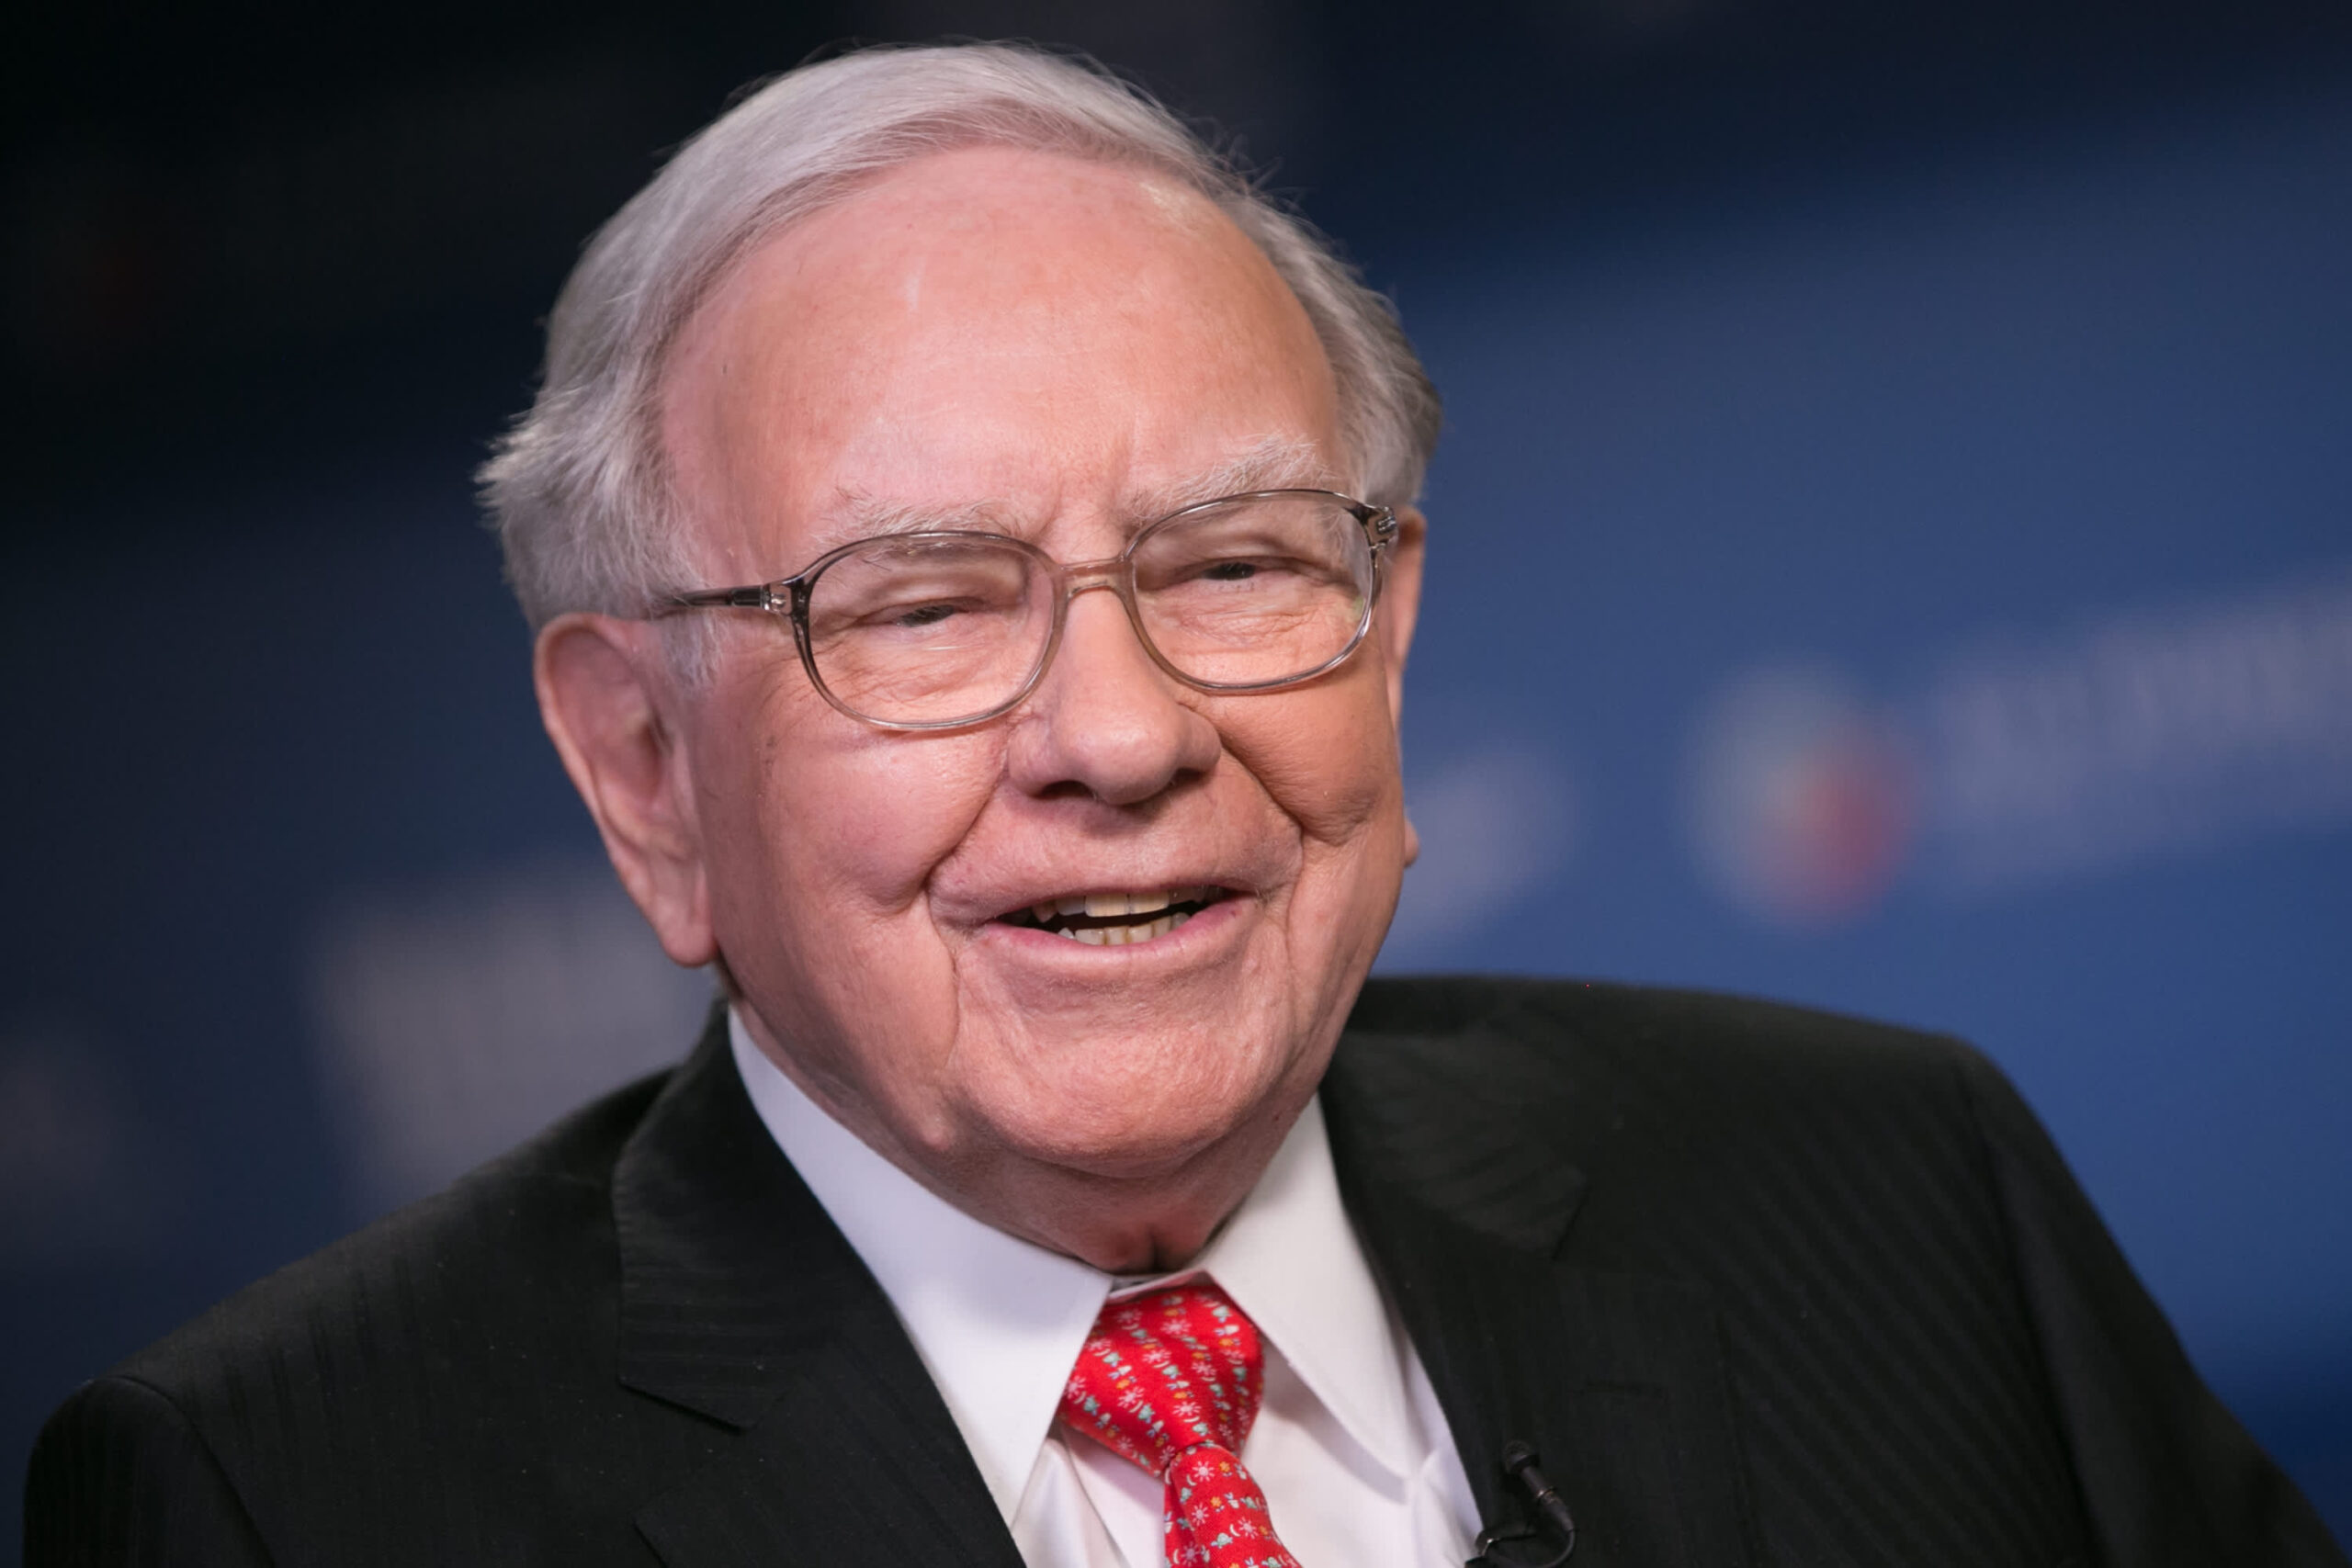 Warren Buffett's Fortune Surpasses Larry Page's, Nears Top Billionaires